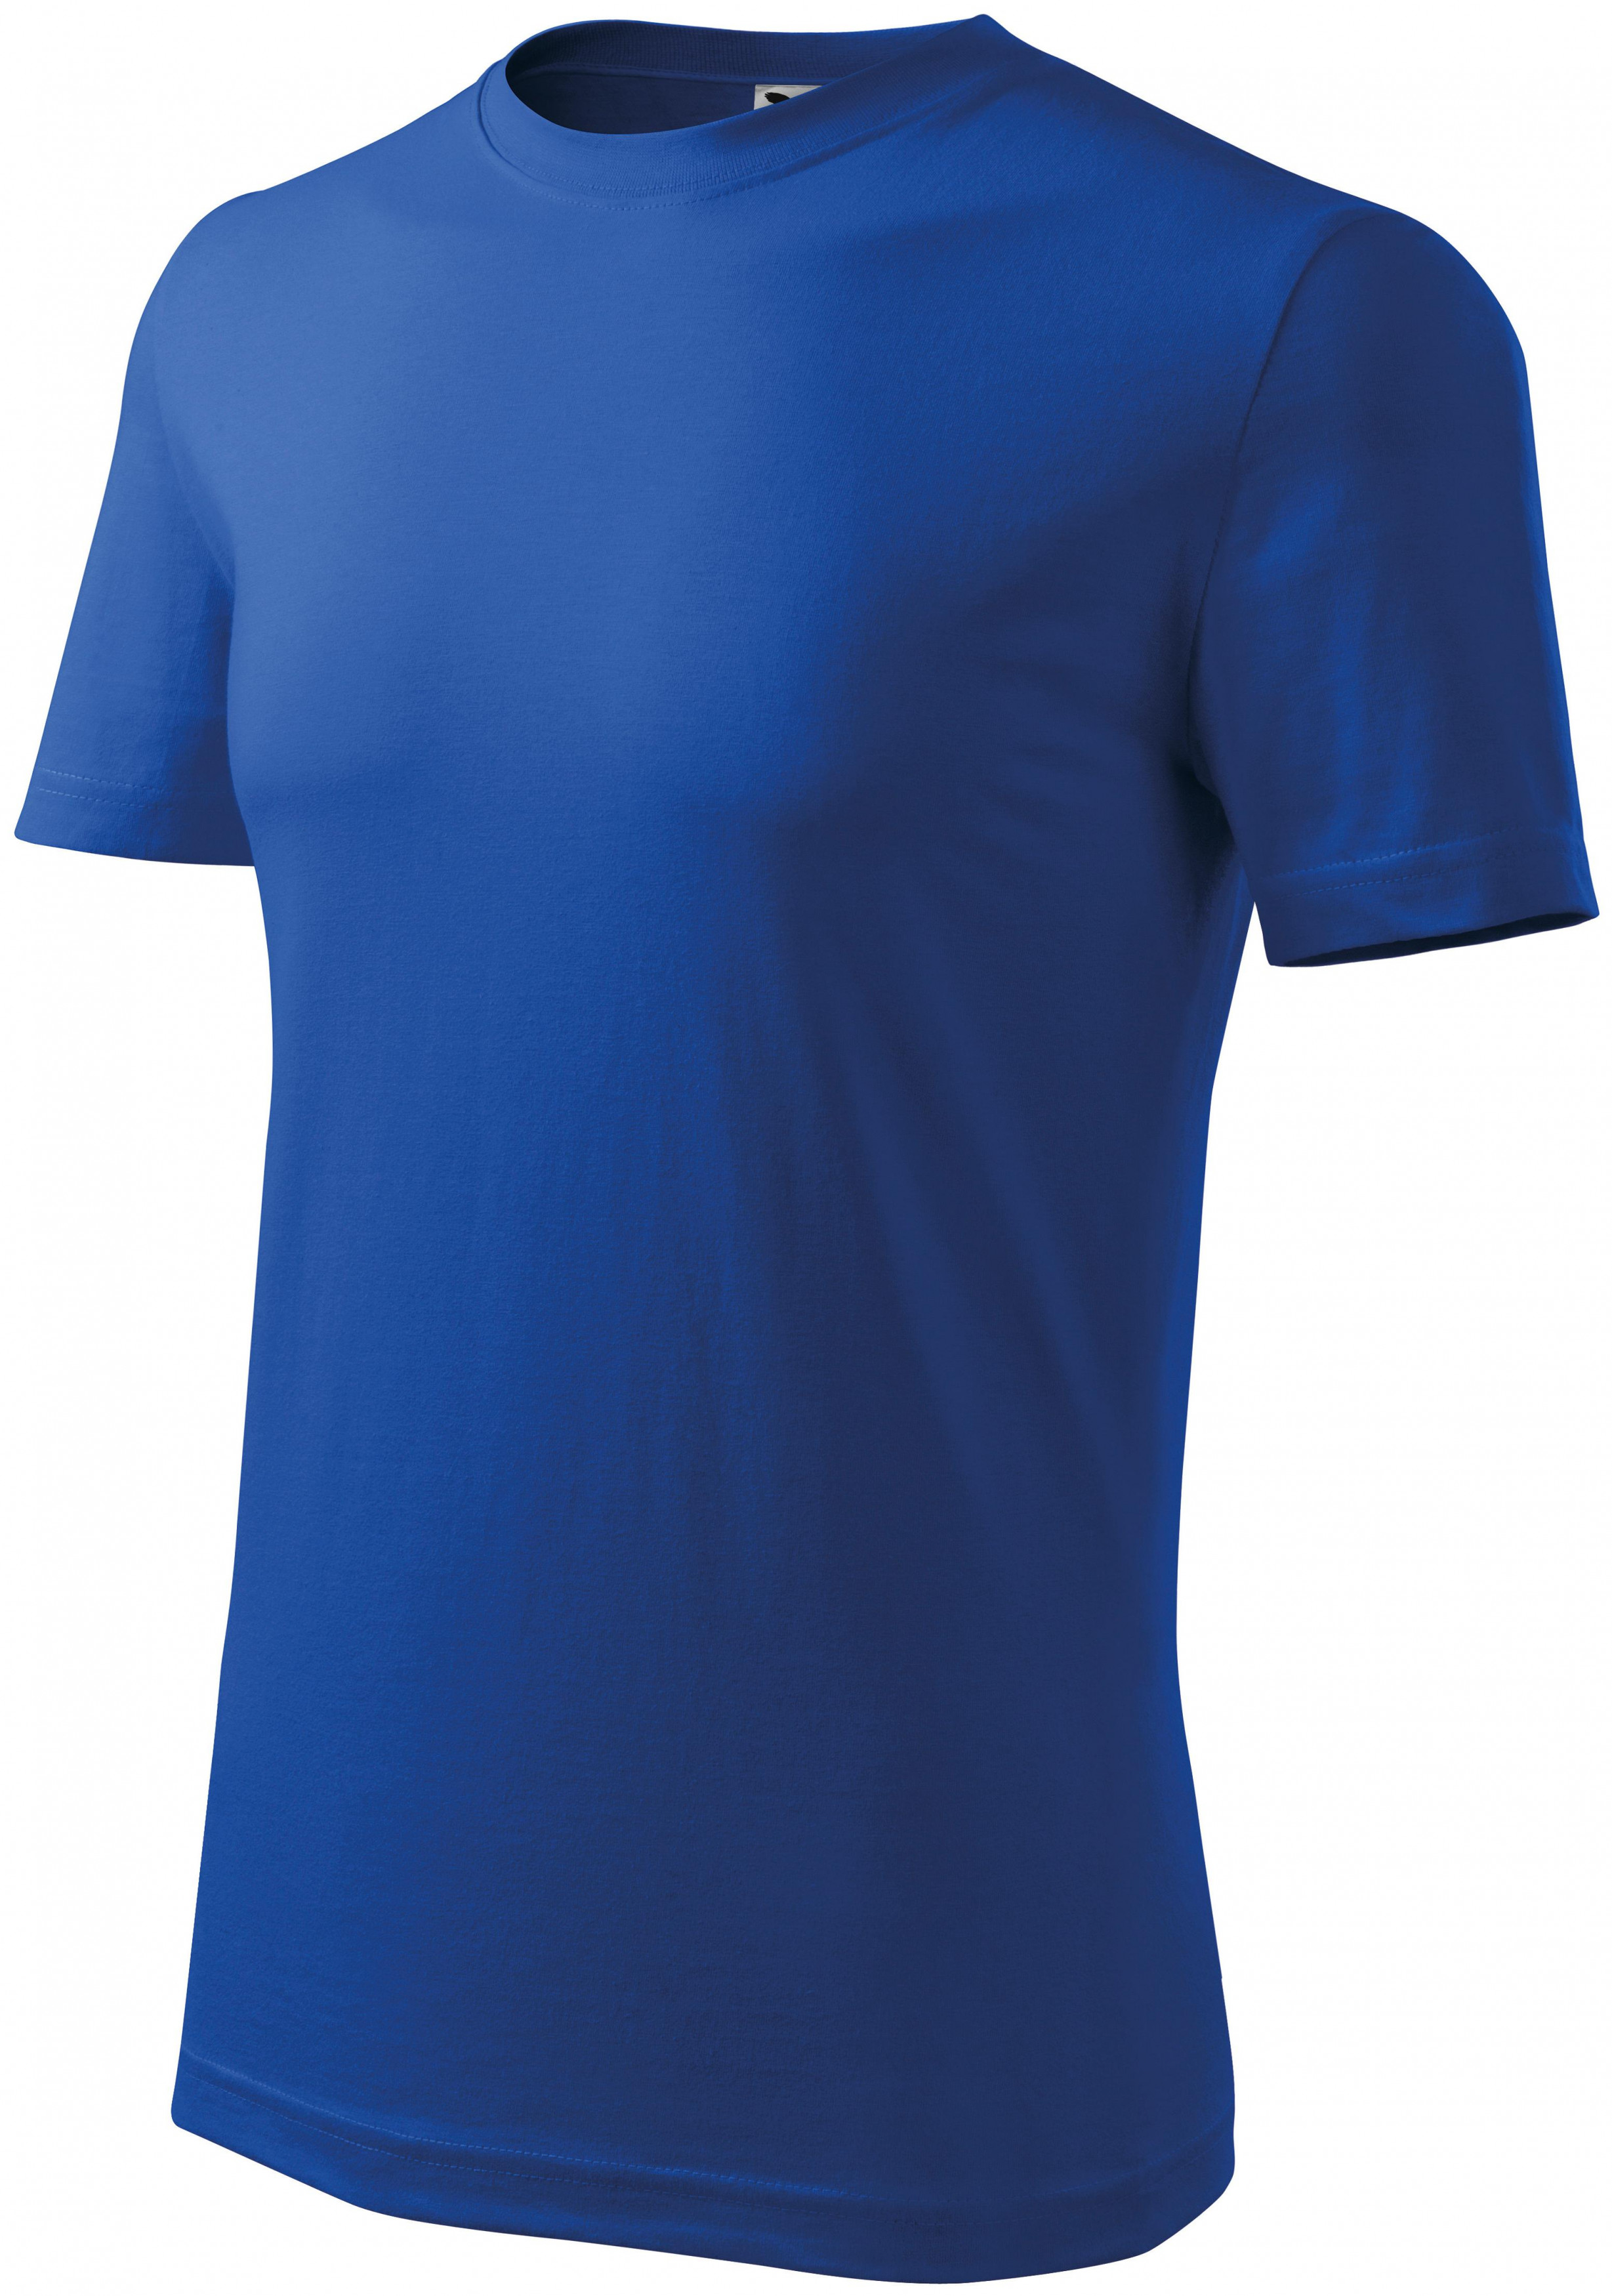 Pánske tričko klasické, kráľovská modrá, L